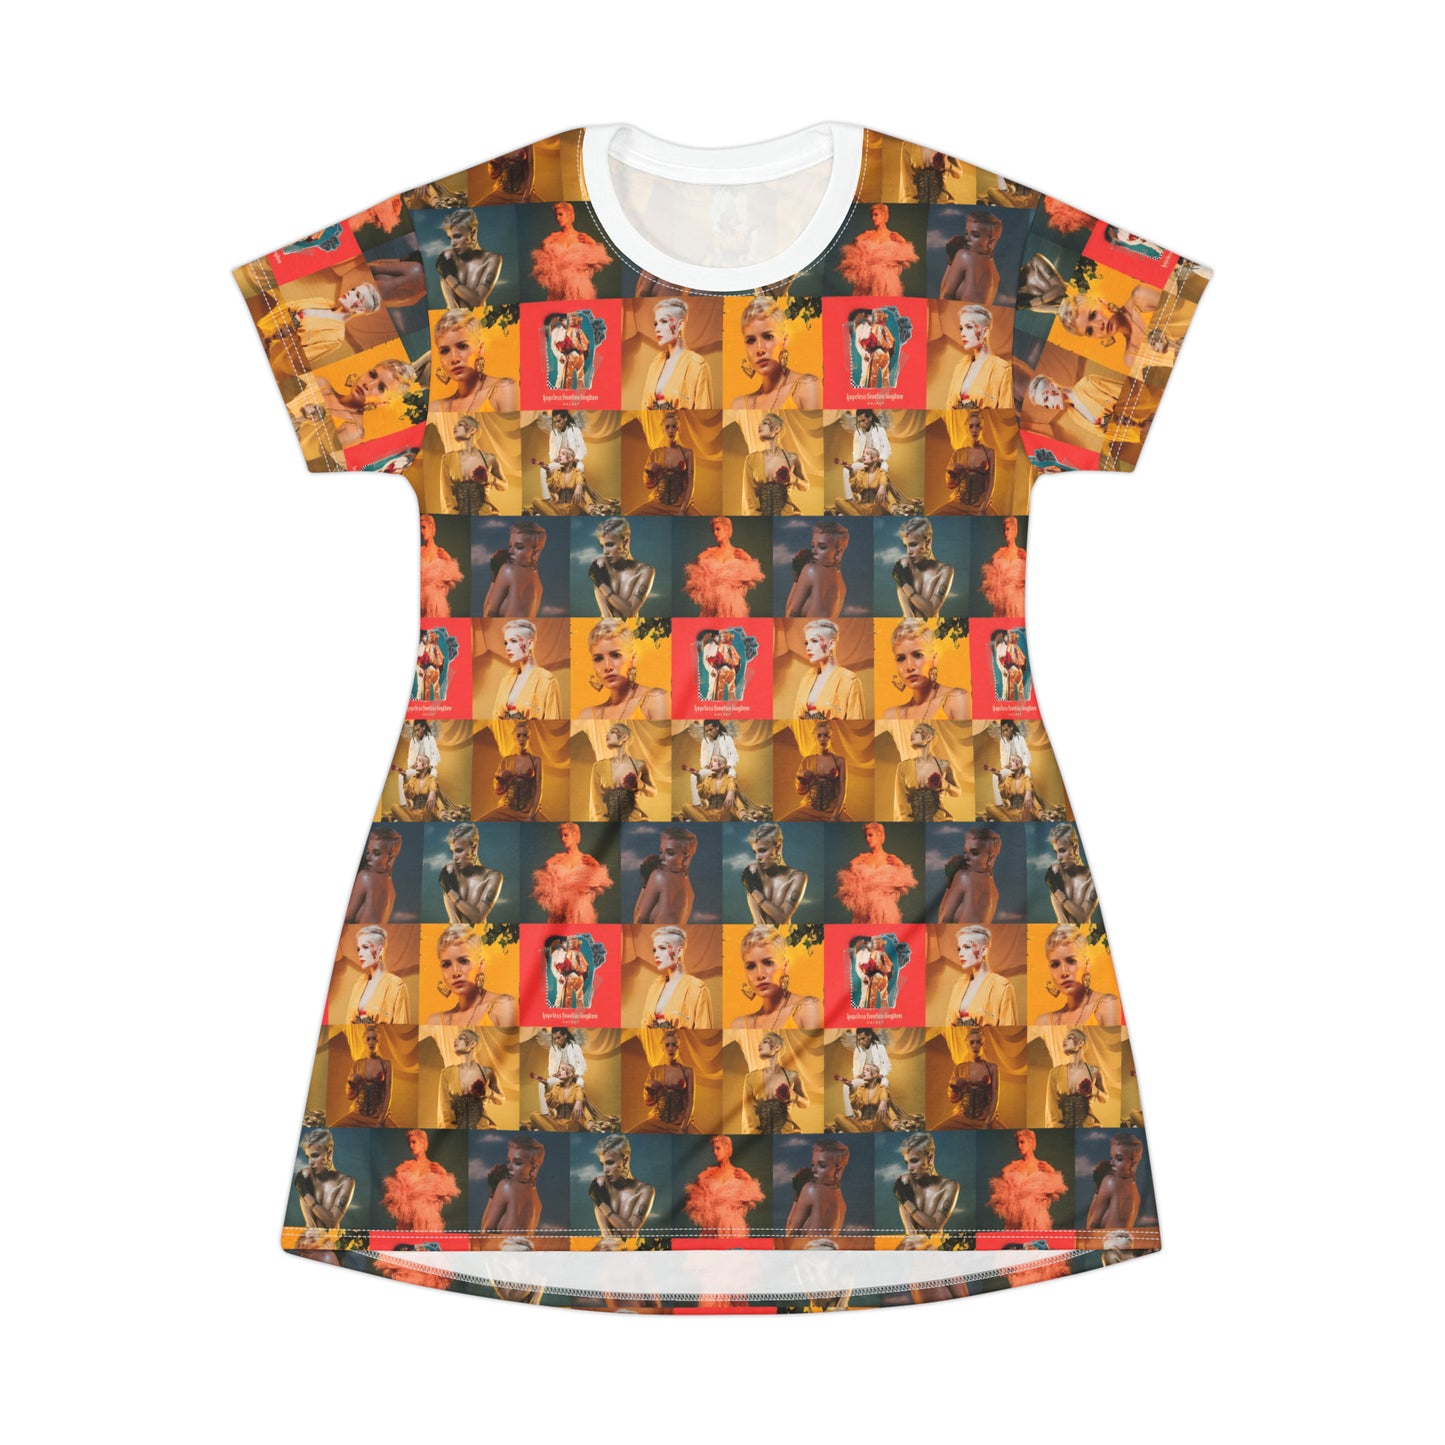 Halsey Hopeless Fountain Kingdom Mosaic T-Shirt Dress